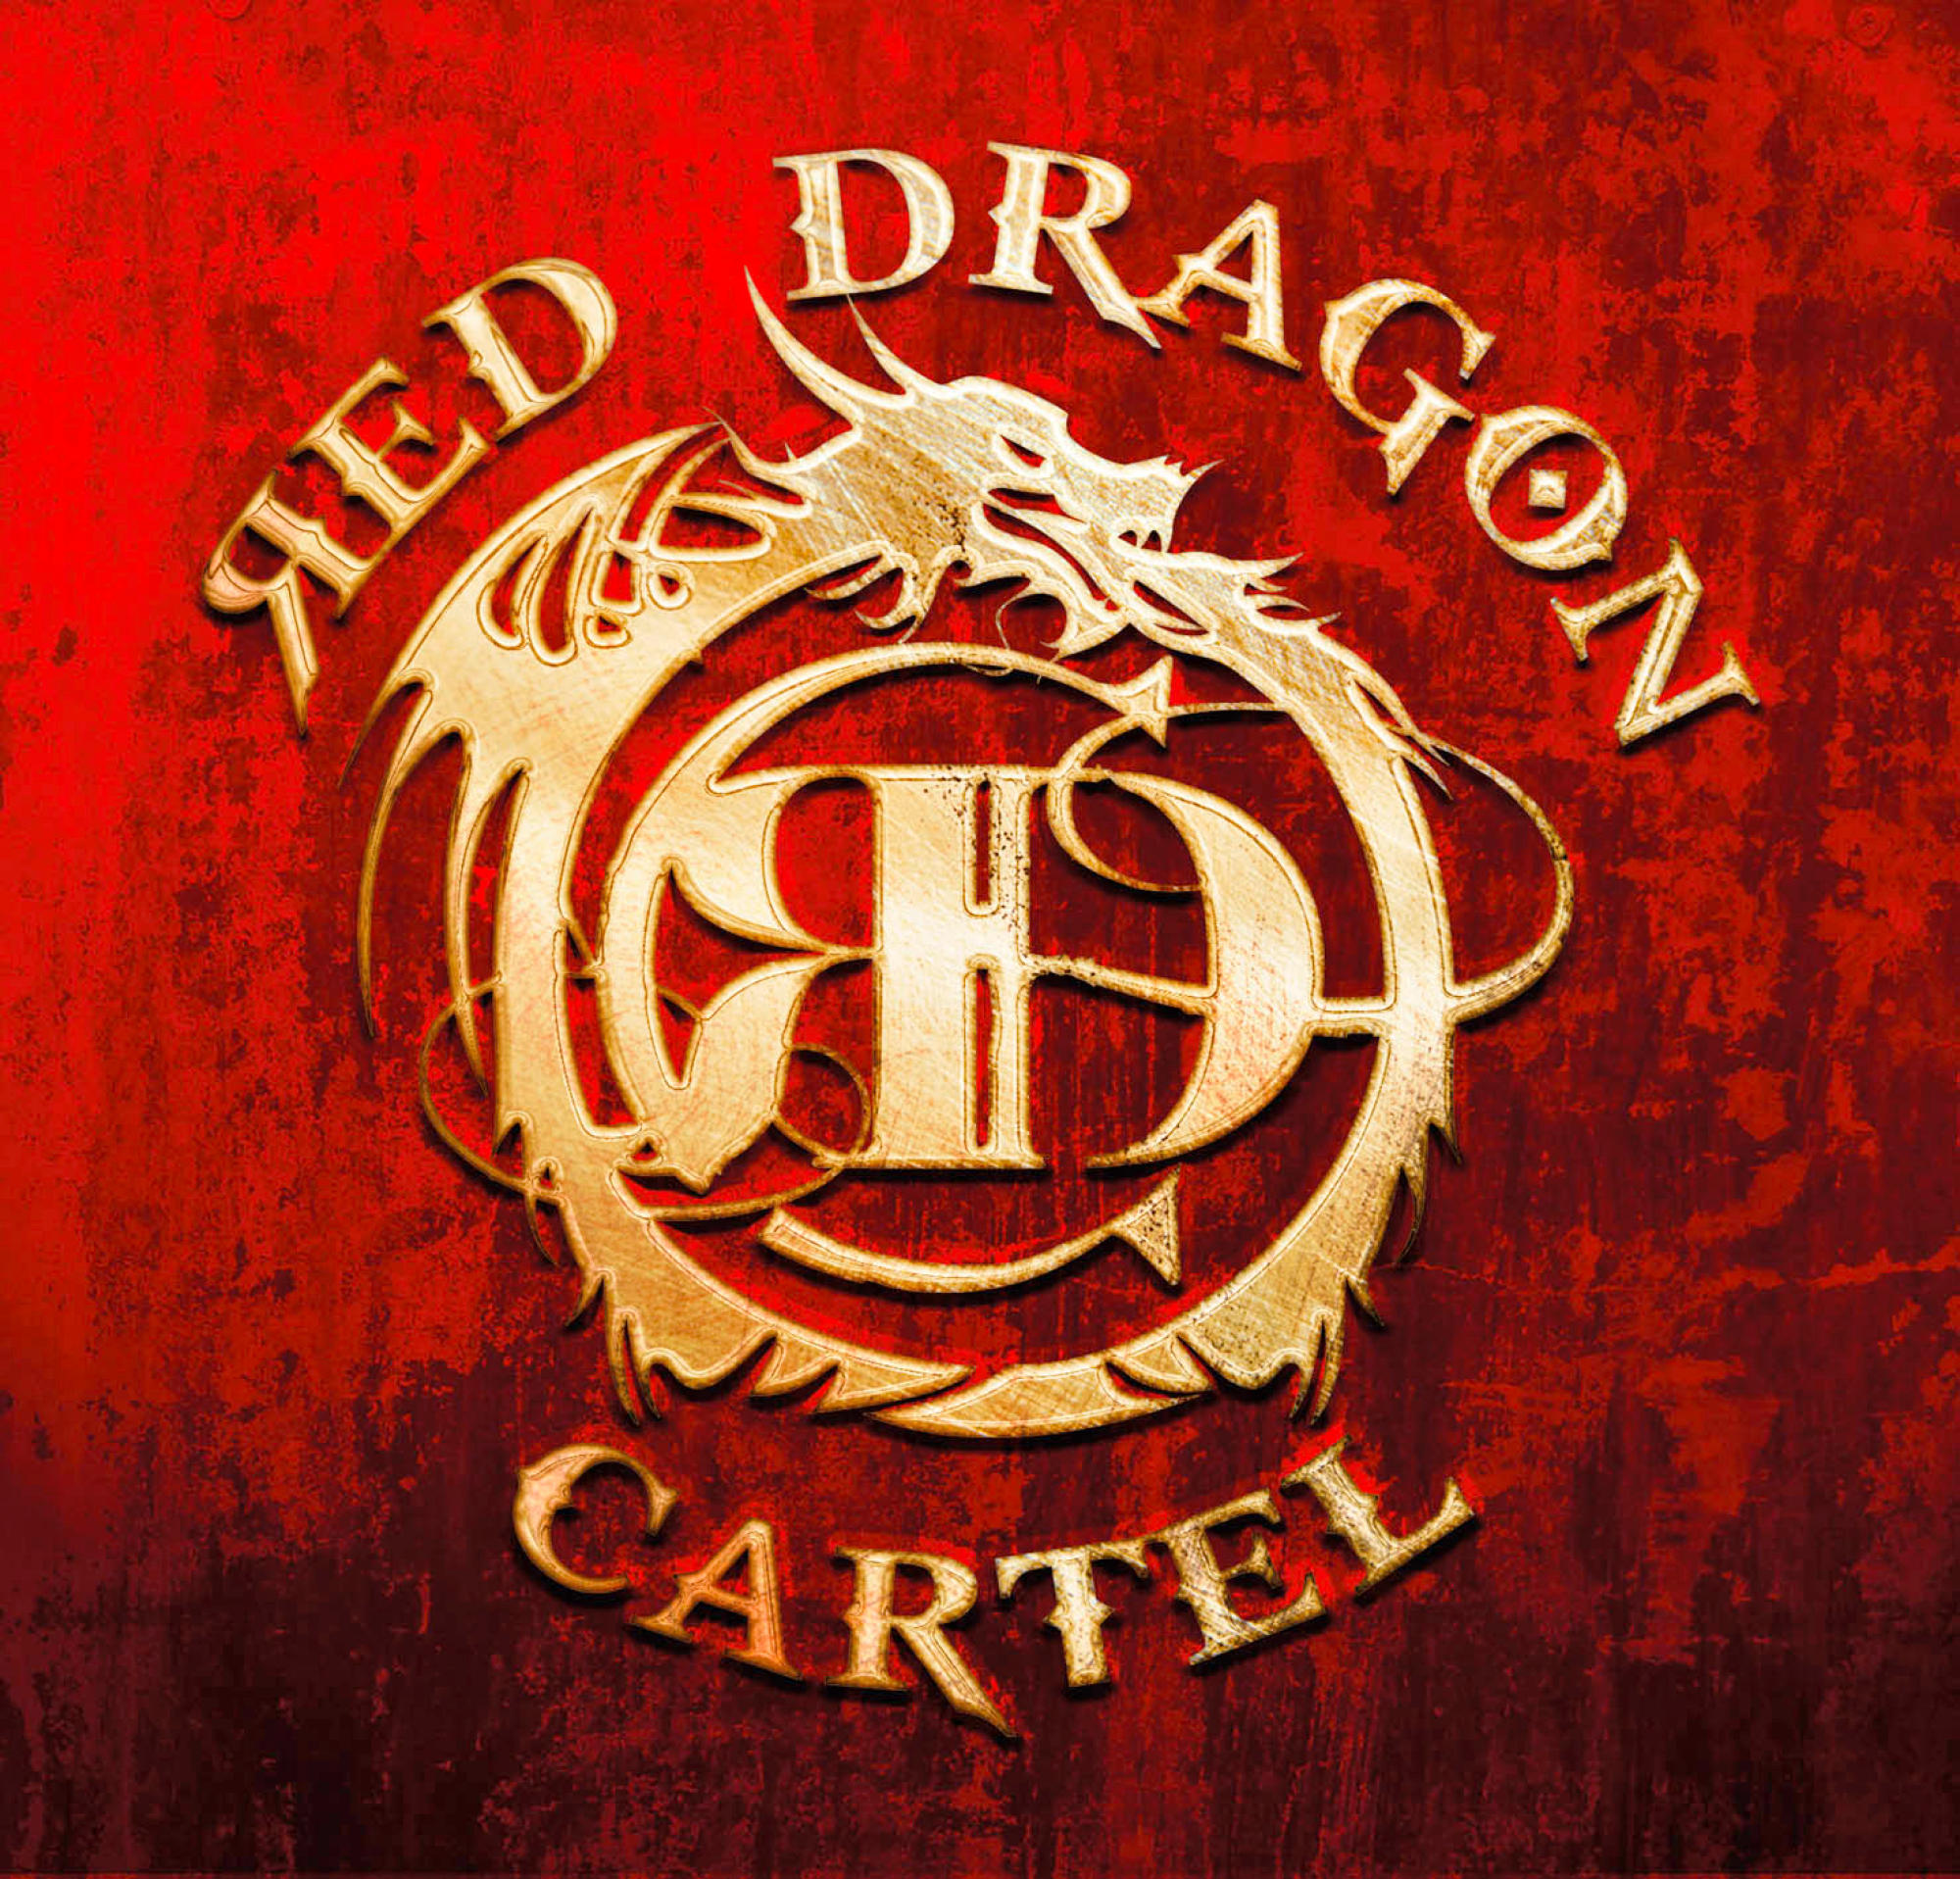 - (CD) Dragon - Red Red Cartel Cartel Dragon